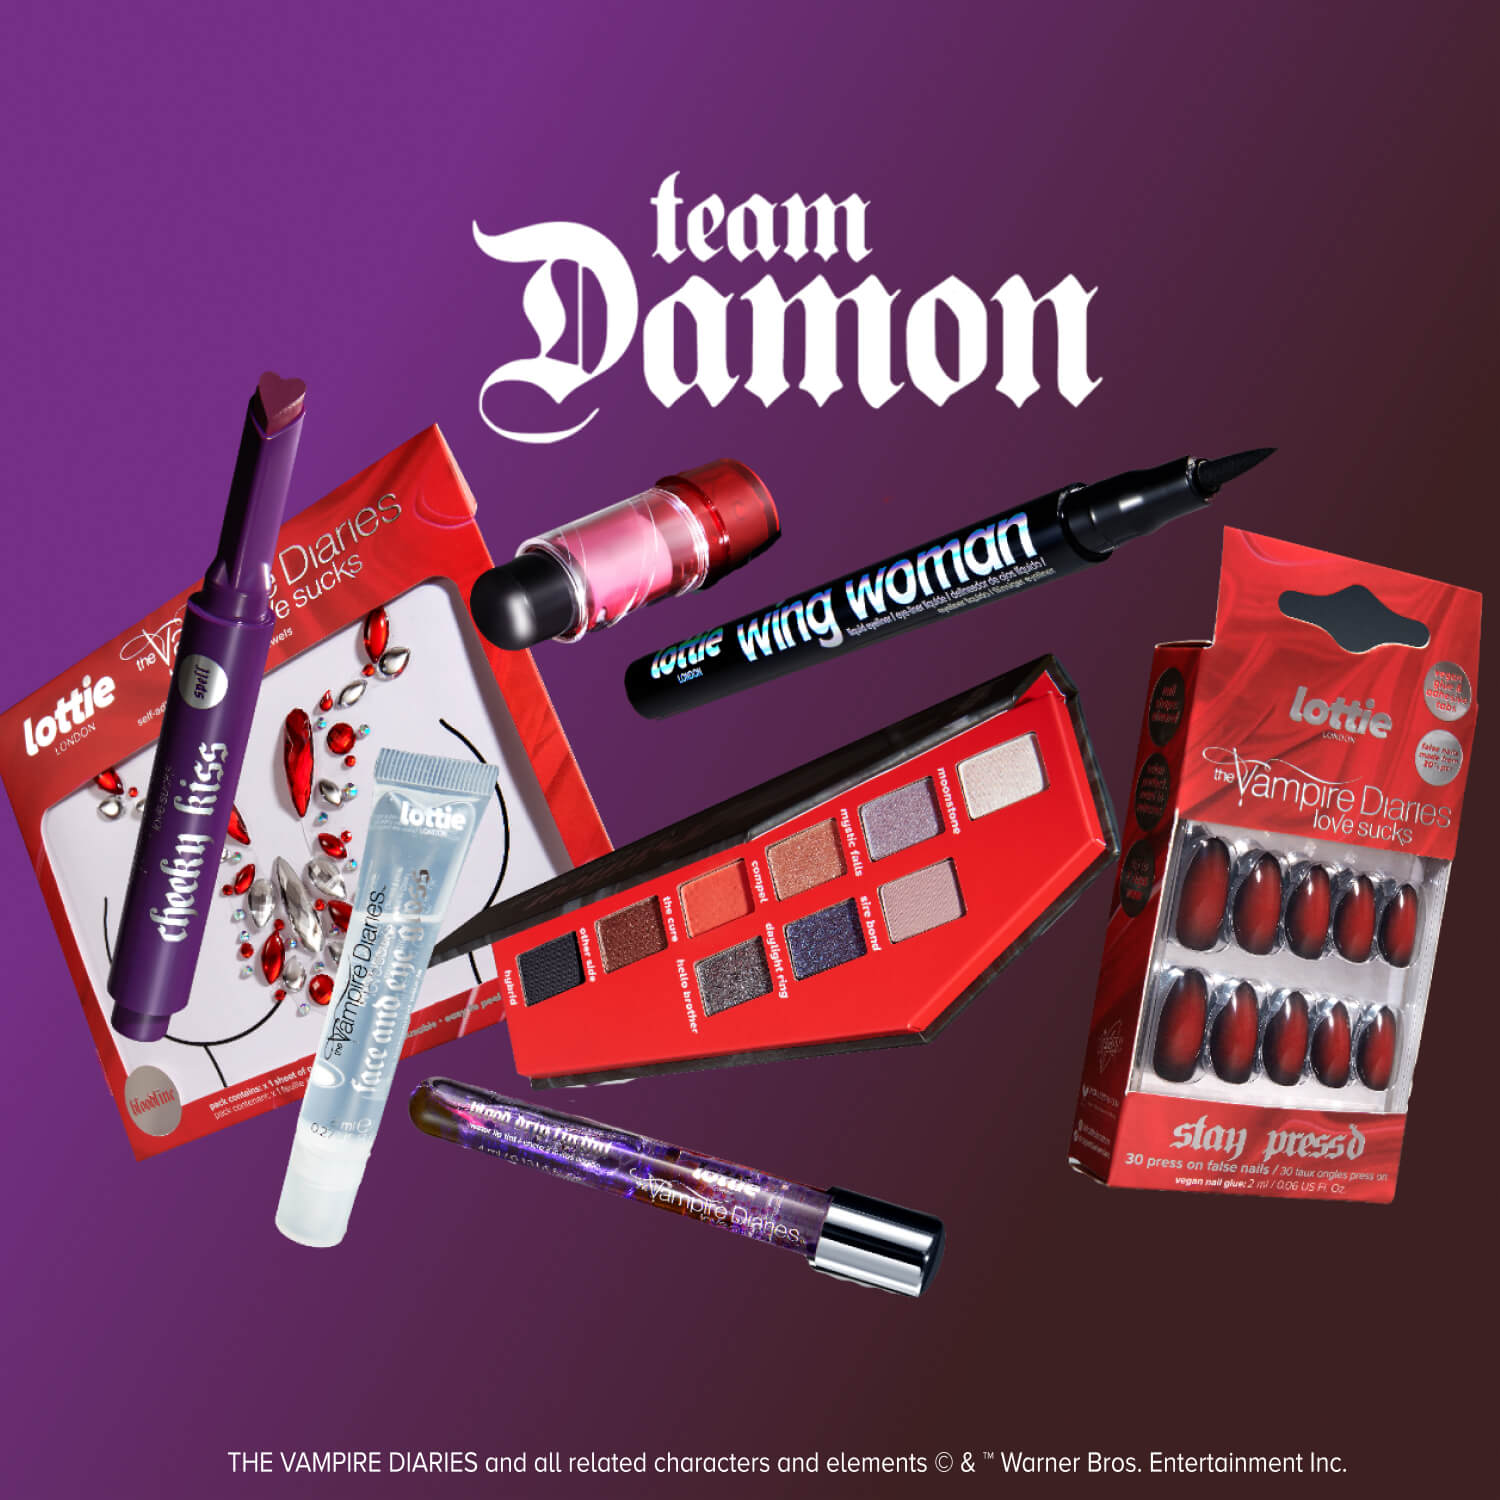 The Vampire Diaries x team Damon bundle